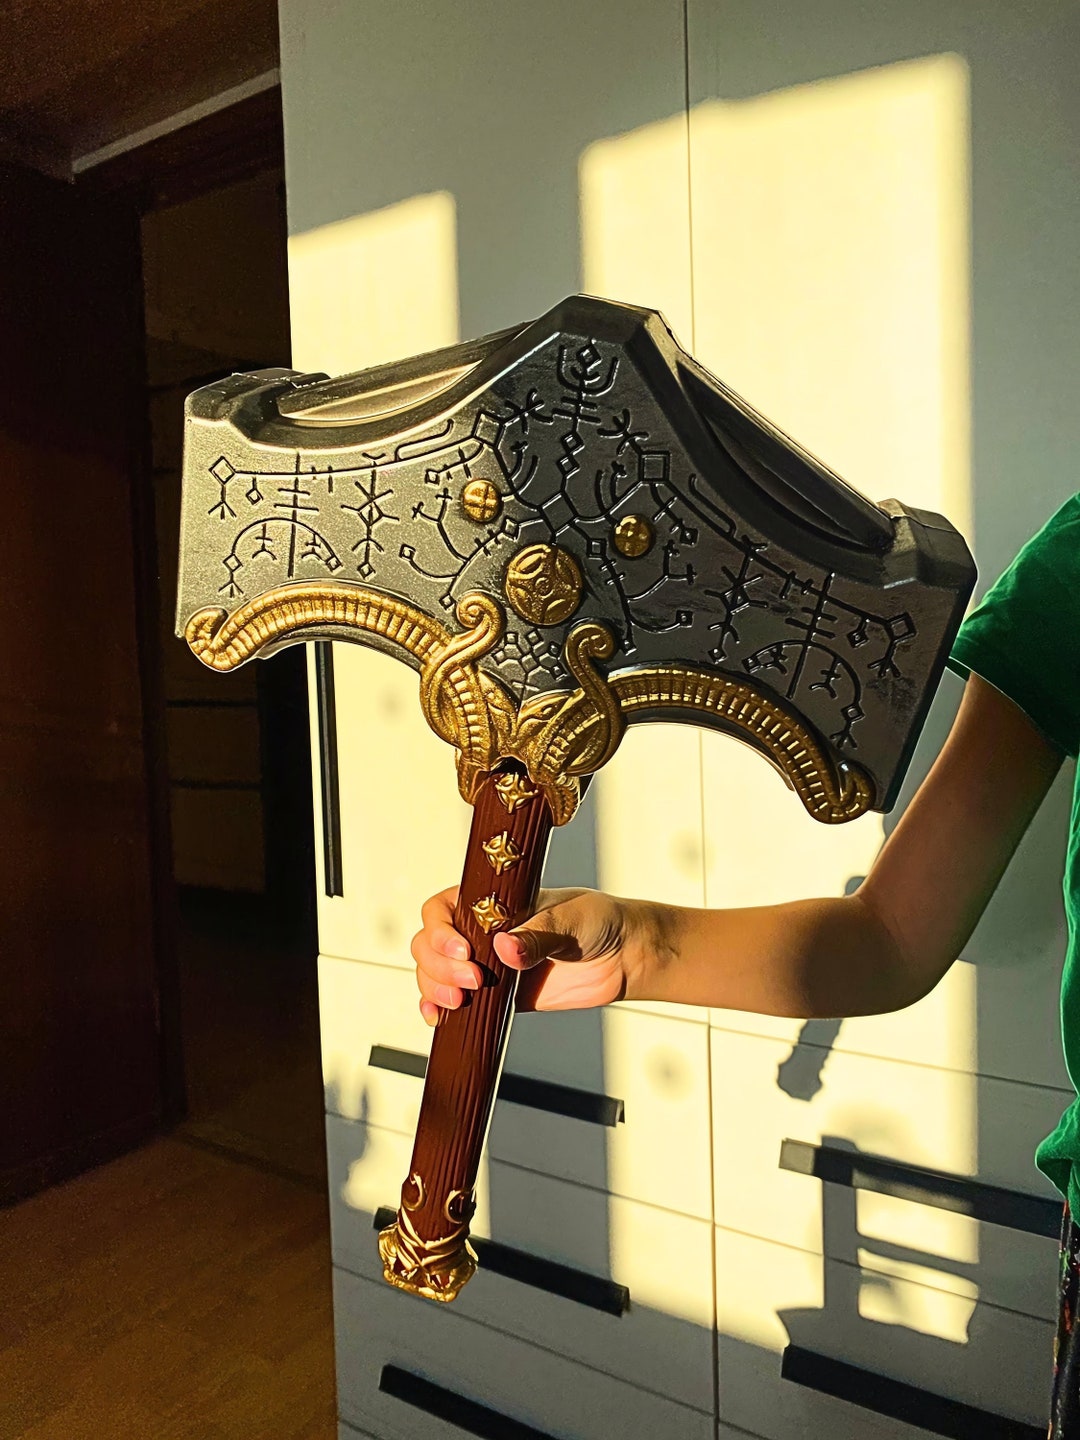 NEW VERSION Thor Mjolnir Hammer From God of War Ragnarok Lifesize 1:1  Cosplay 3d Print Props Costume Prop Replica 